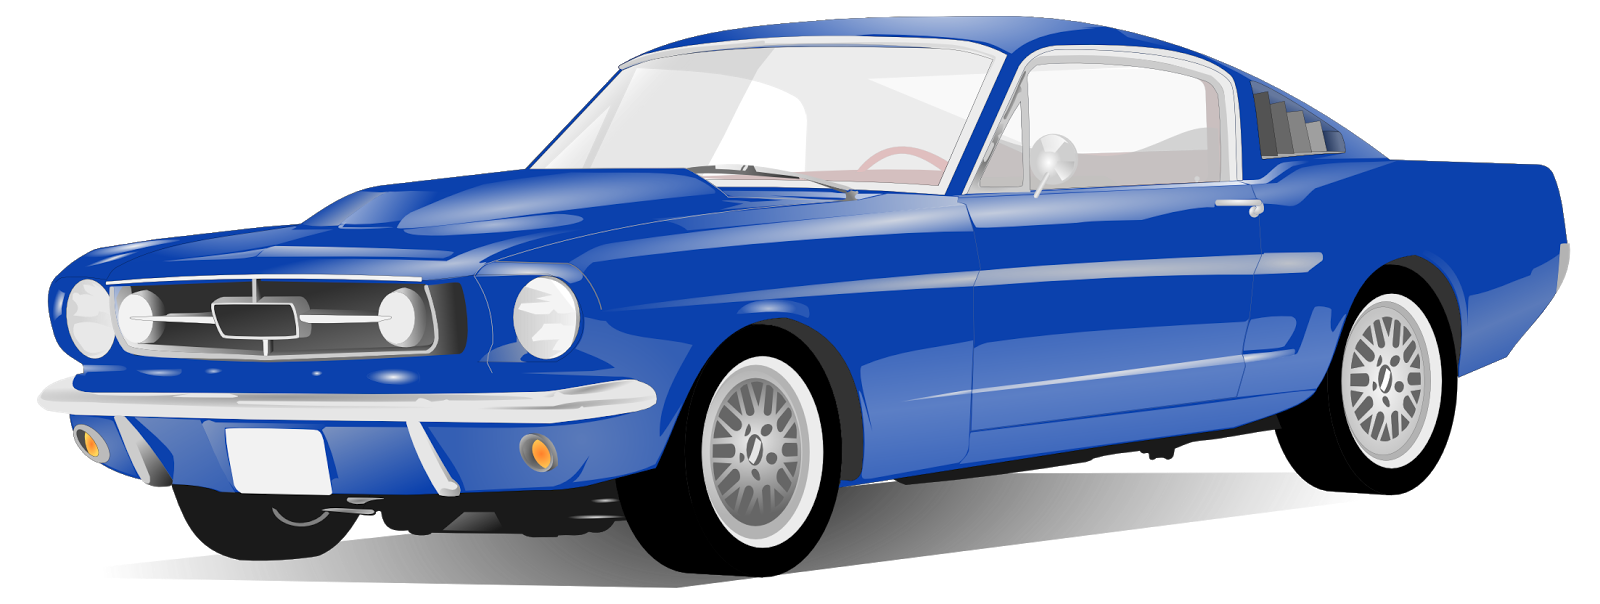 Featured image of post Carros Antigos Azul Png : Carro toyota avanza minivan suzuki apv, carro, carro compacto, condução, carro png.